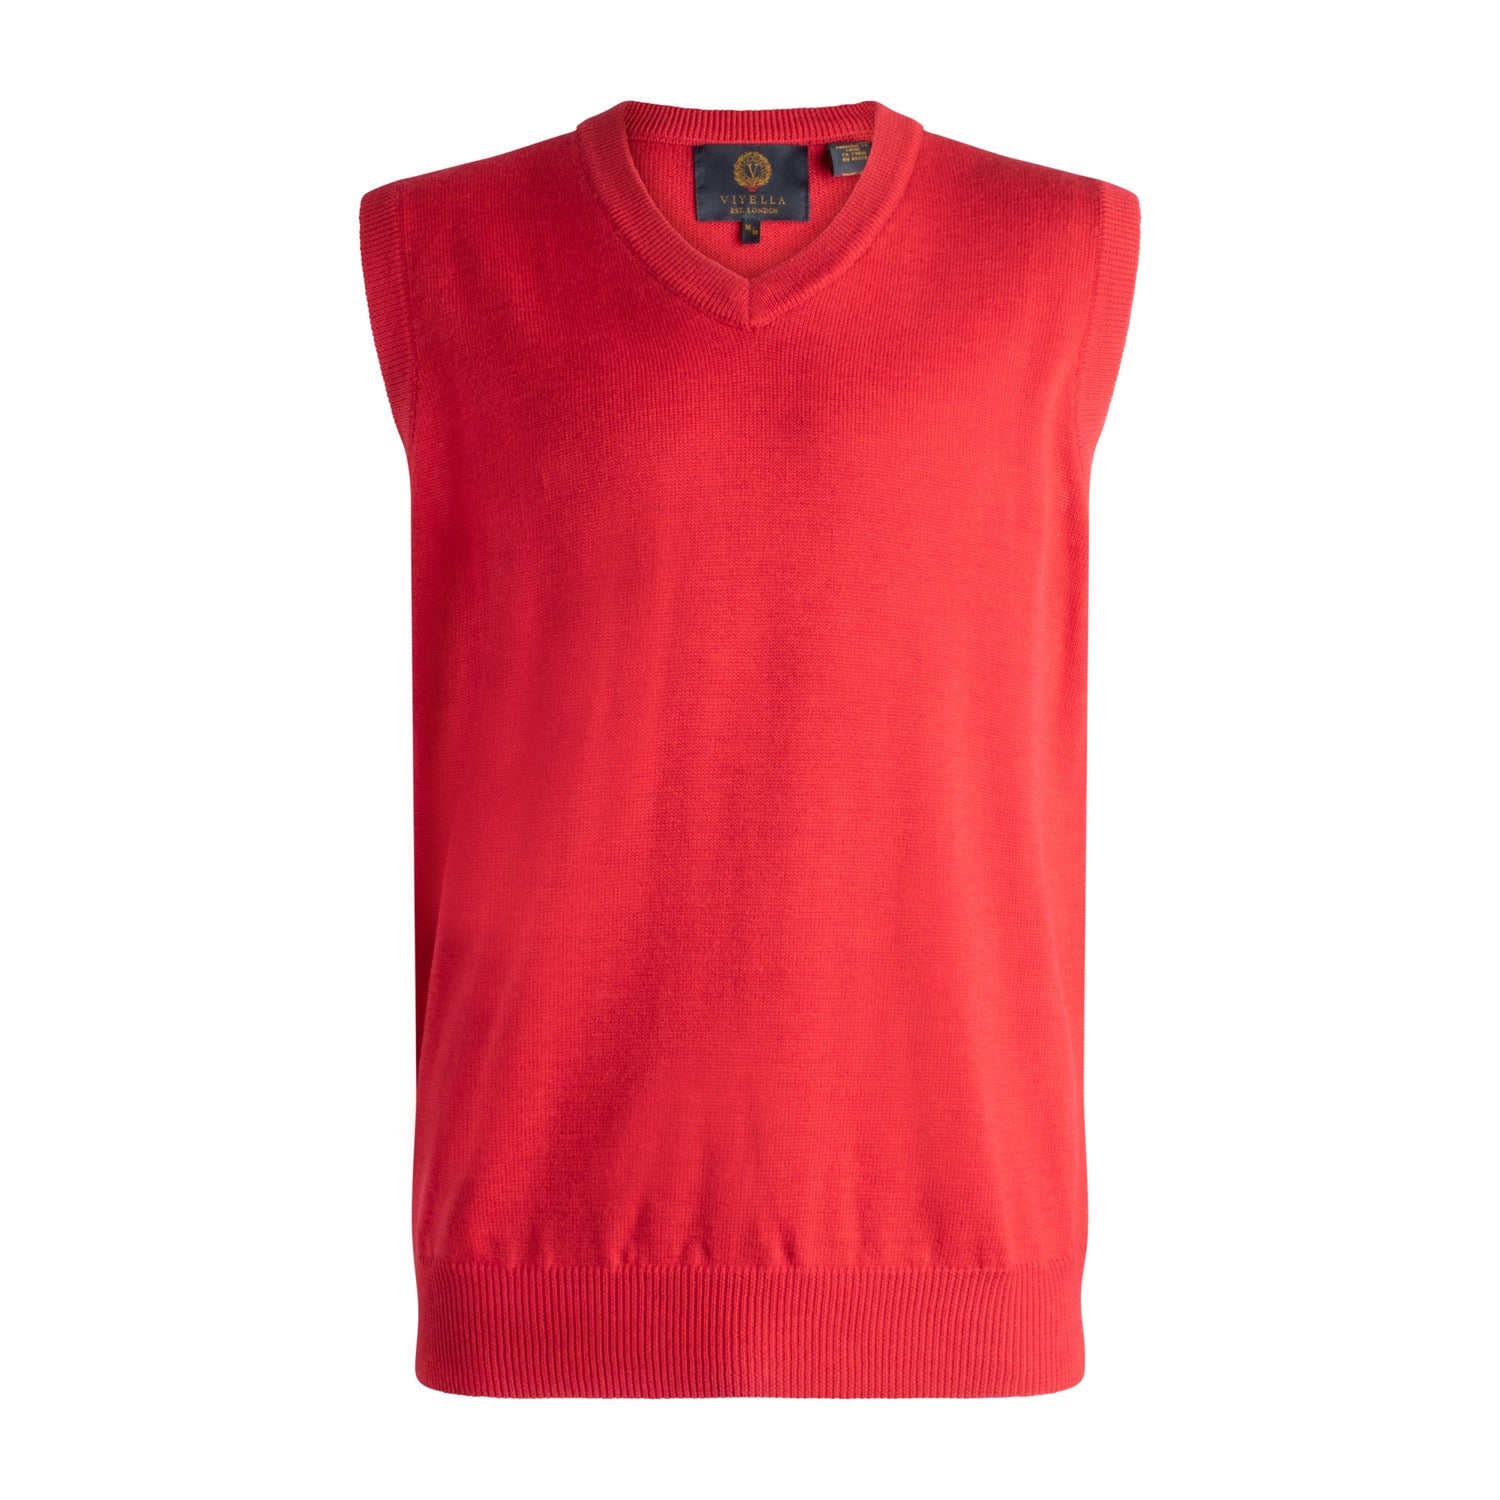 Extra Fine 'Zegna Baruffa' Merino Wool V-Neck Sleeveless Sweater Vest in Admiral Red by Viyella